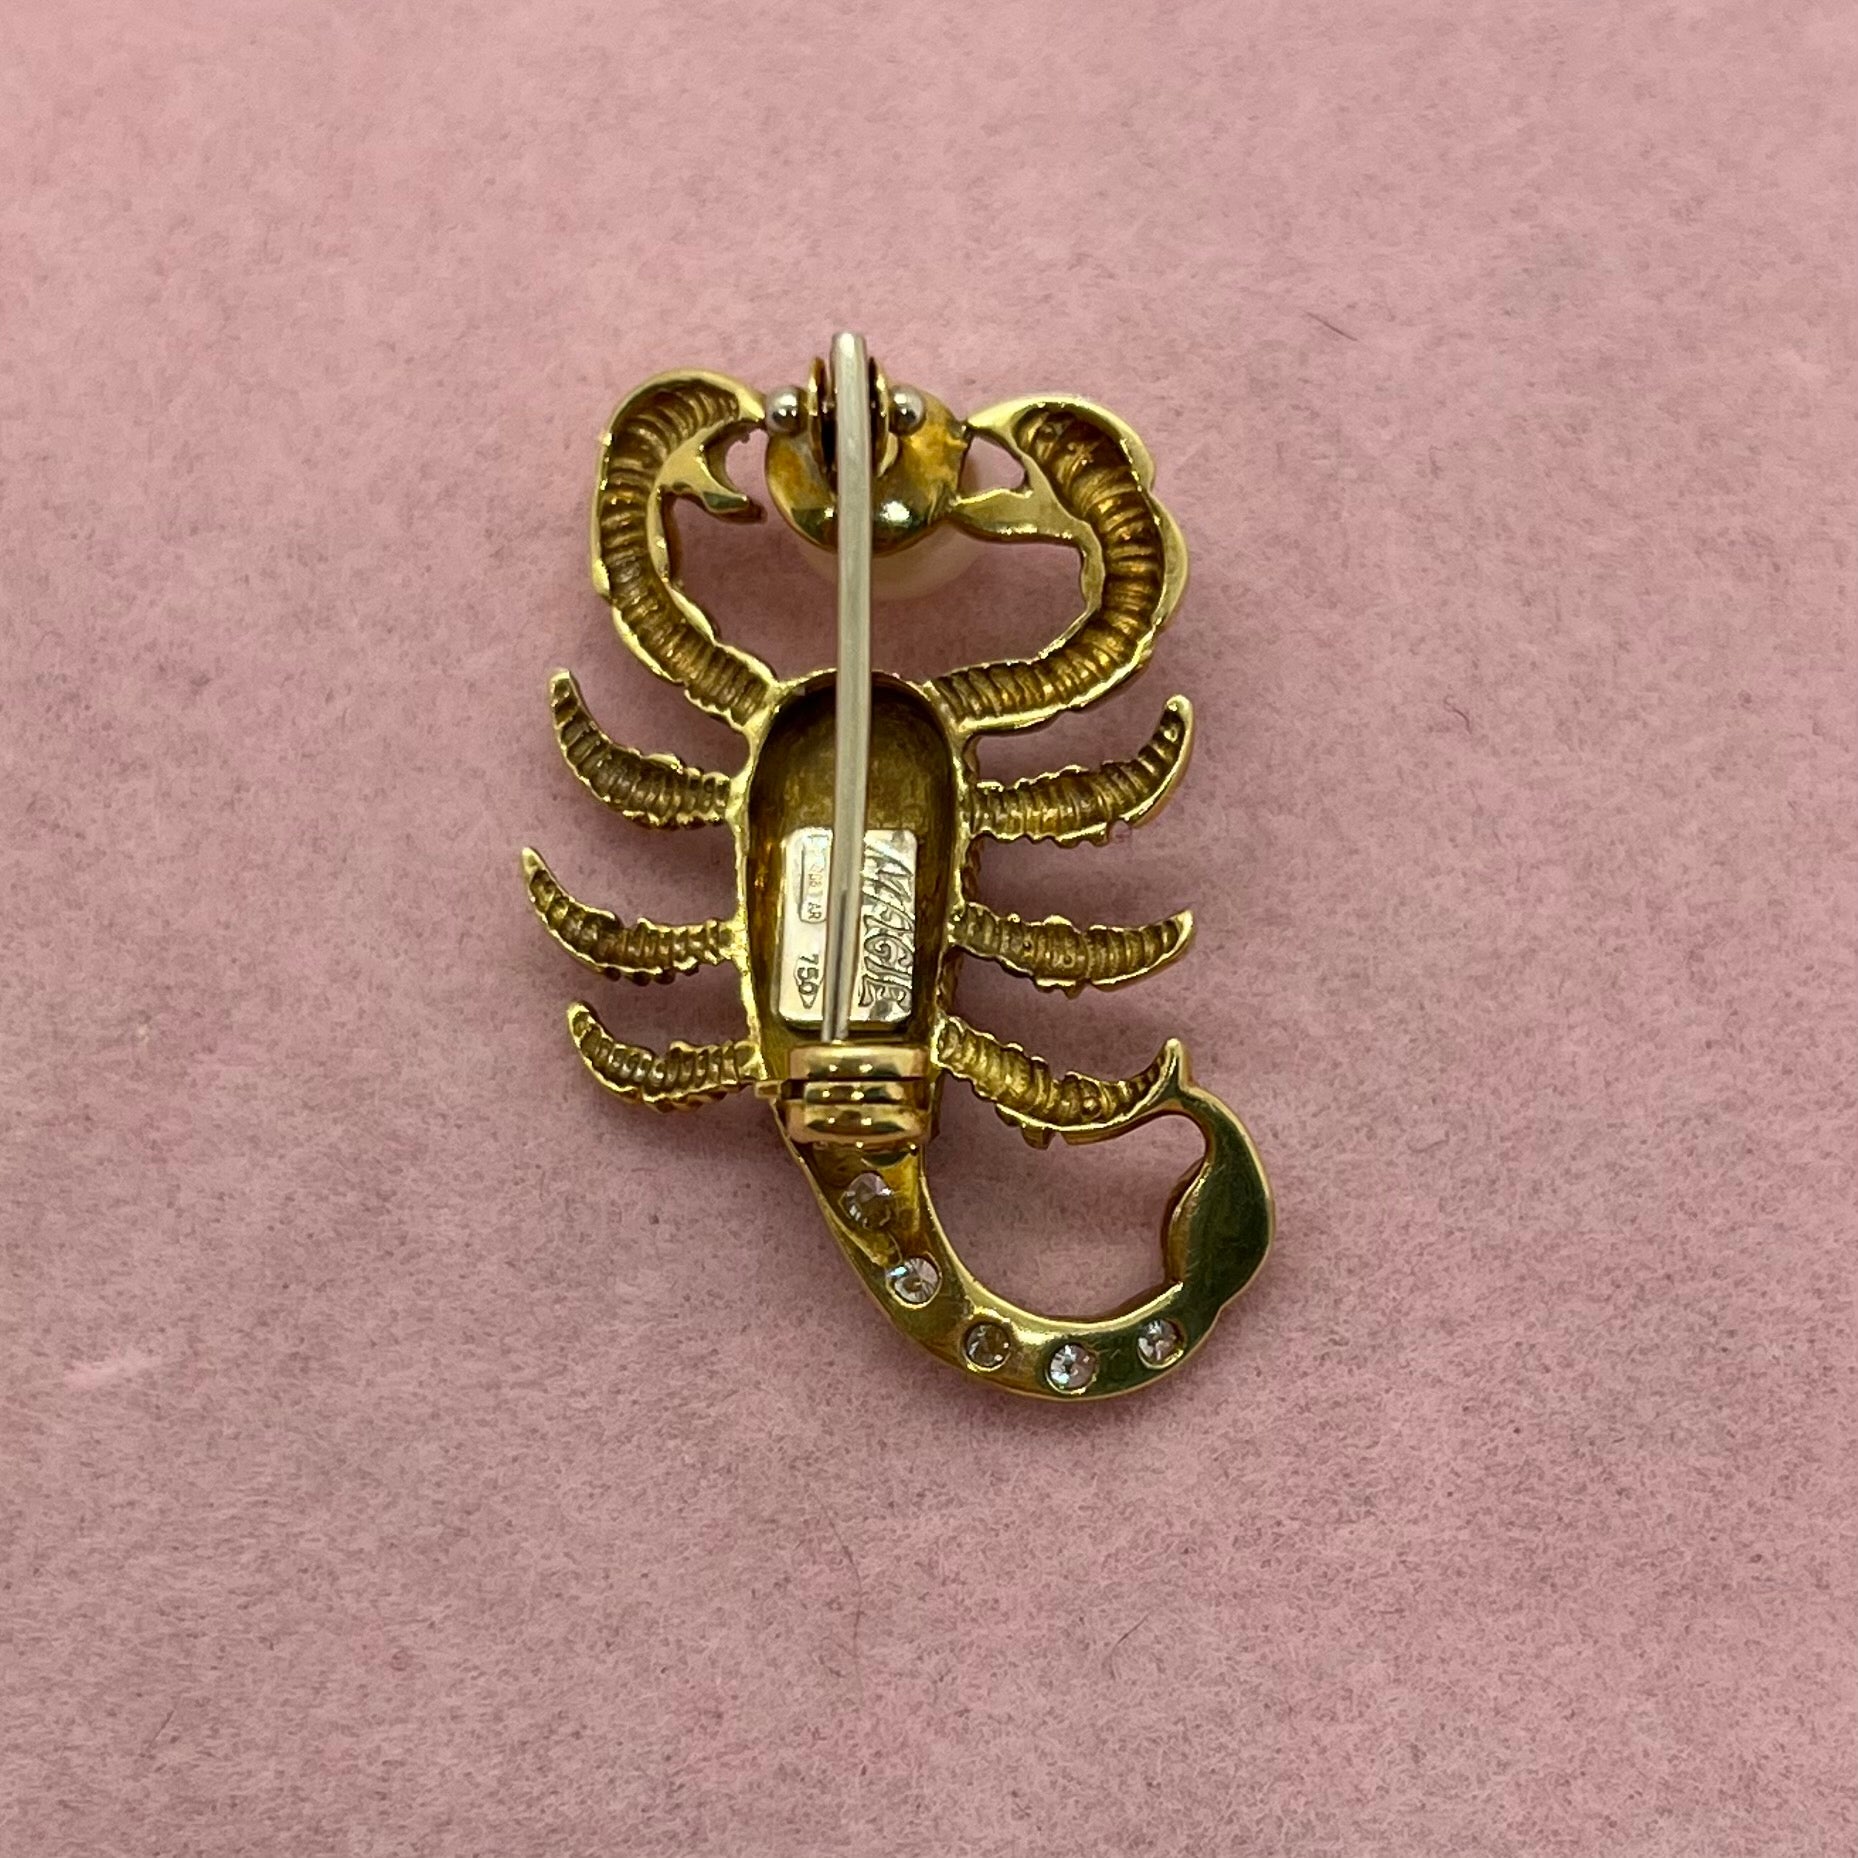 Scorpion Brooch/Pendant